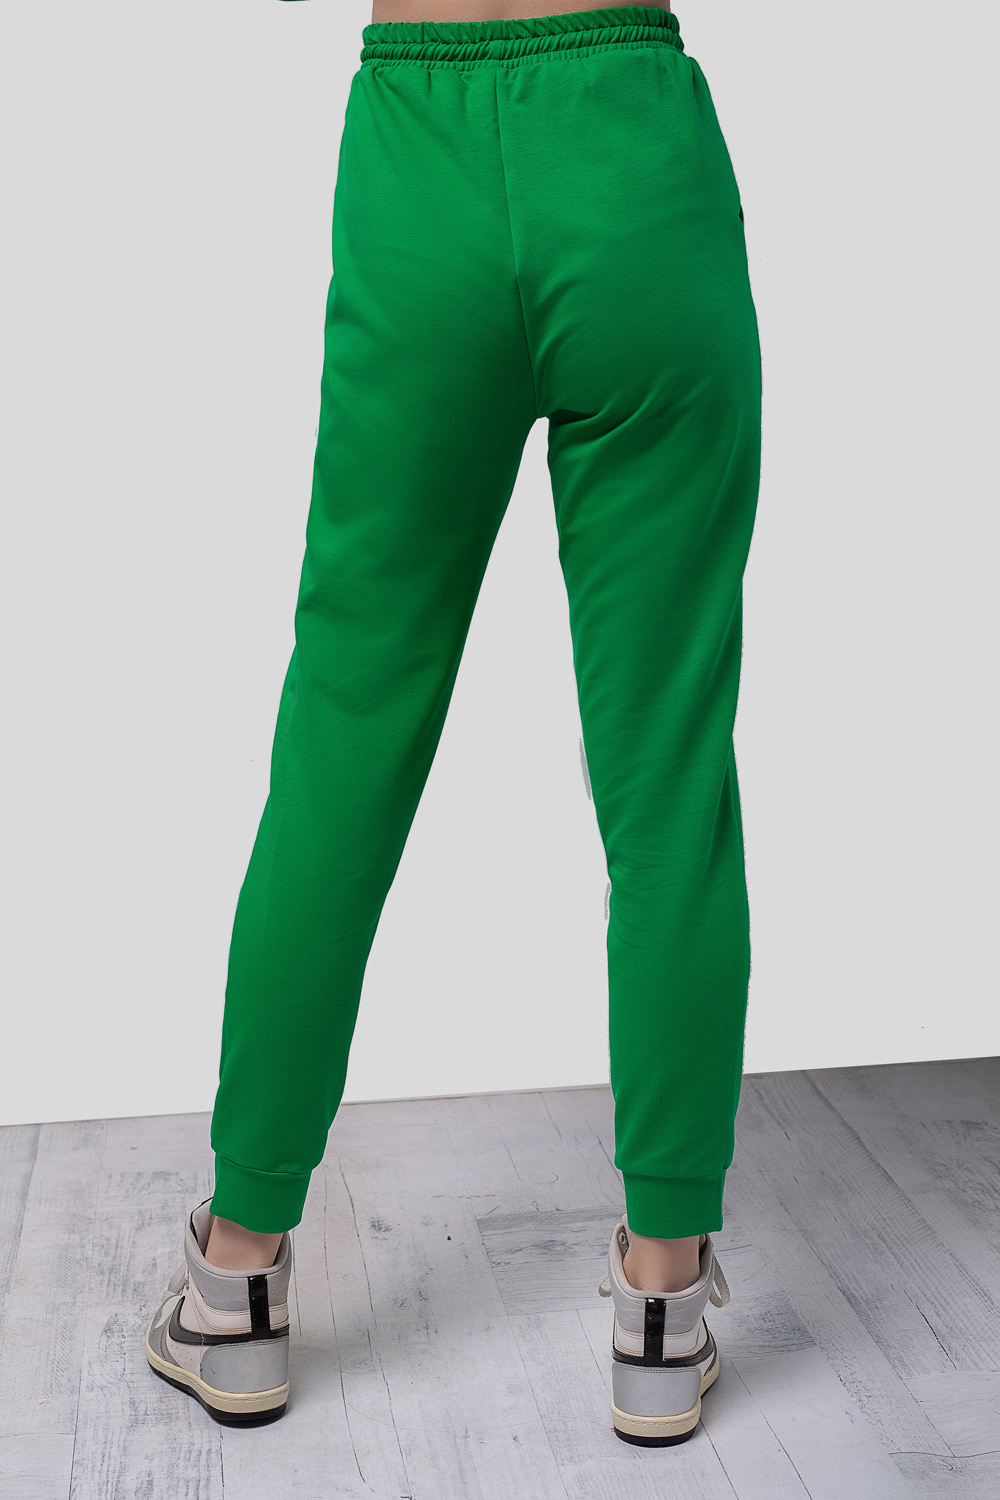 Green pants with drawstrings